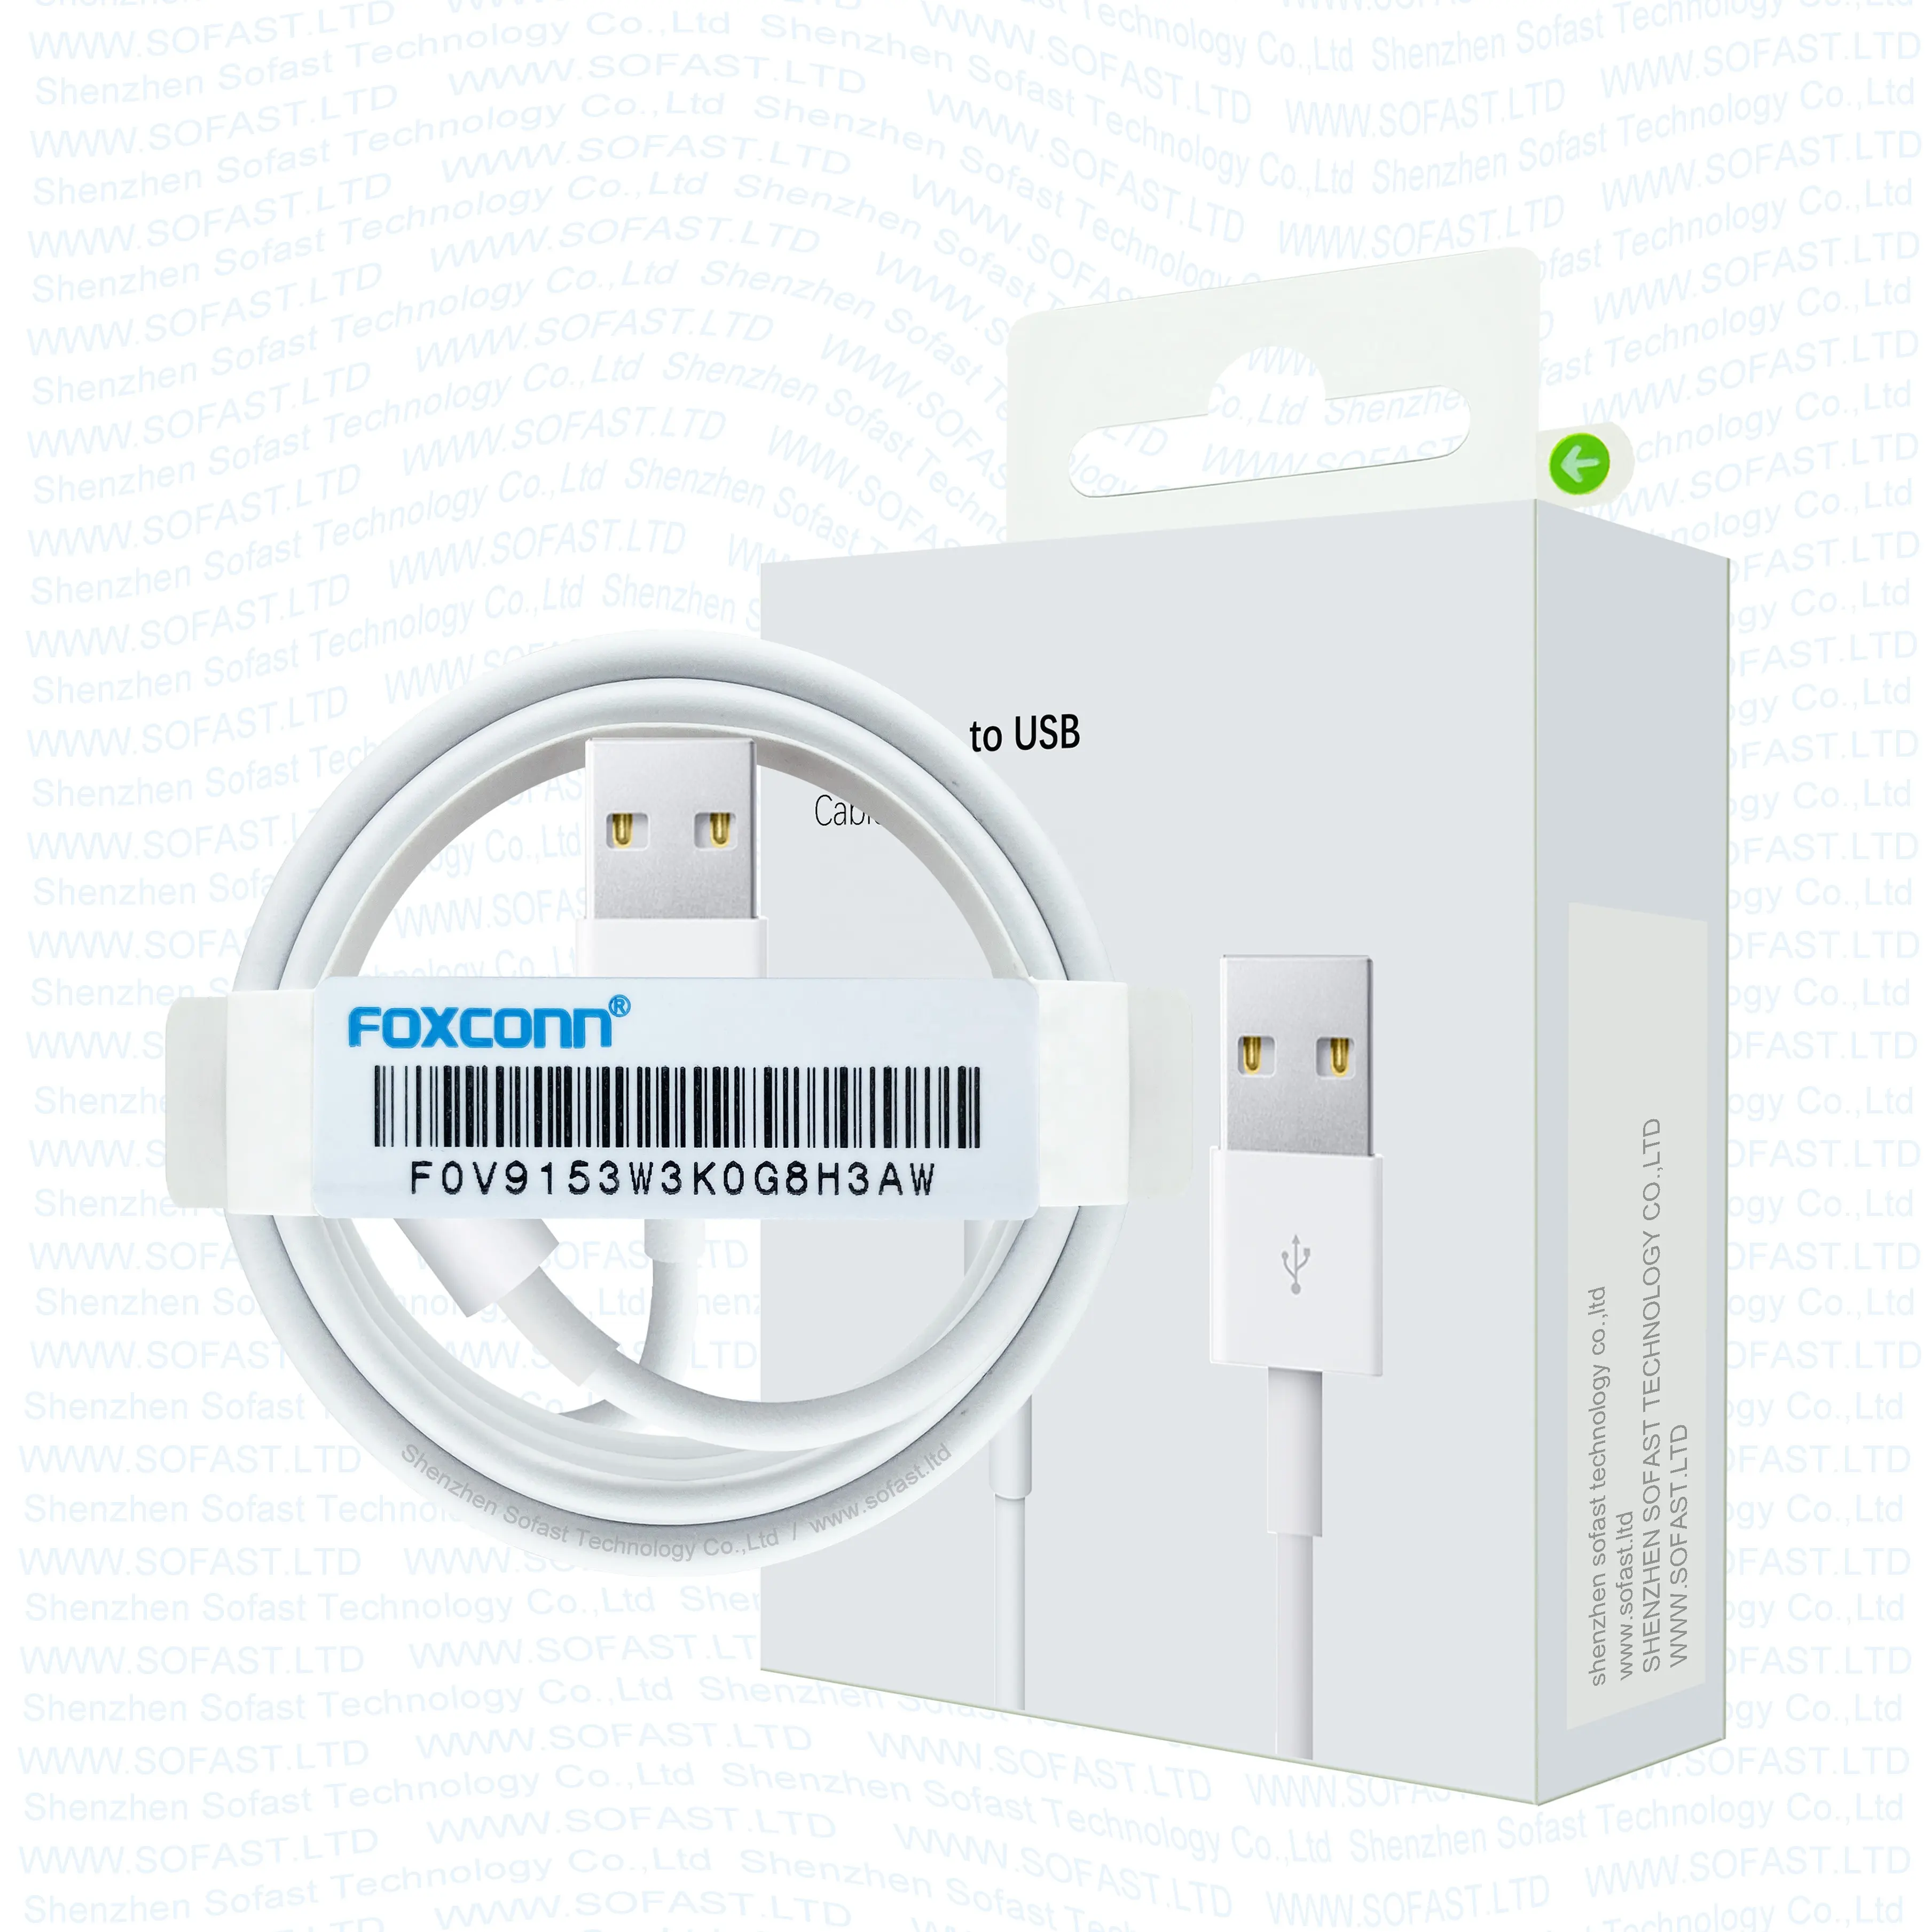 original foxconn E75 cable for iphone sync data for iphone fast charging original cable with package